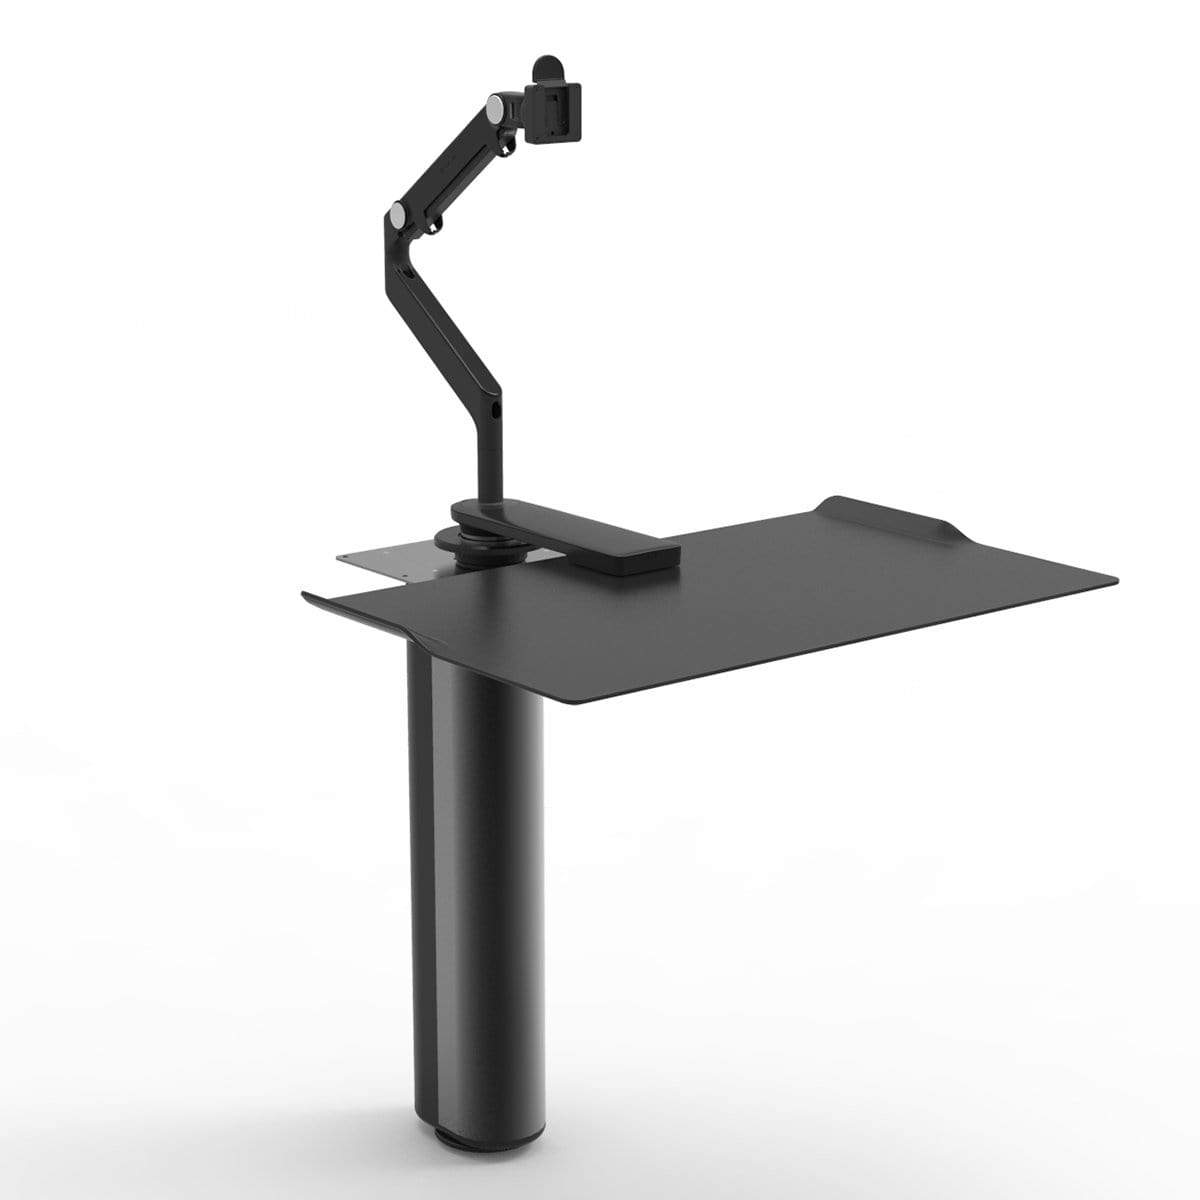 Humanscale Under Desk Black / M2 Monitor Arm Mount (Arm Sold Separately) Humanscale QUICKSTAND UNDER DESK